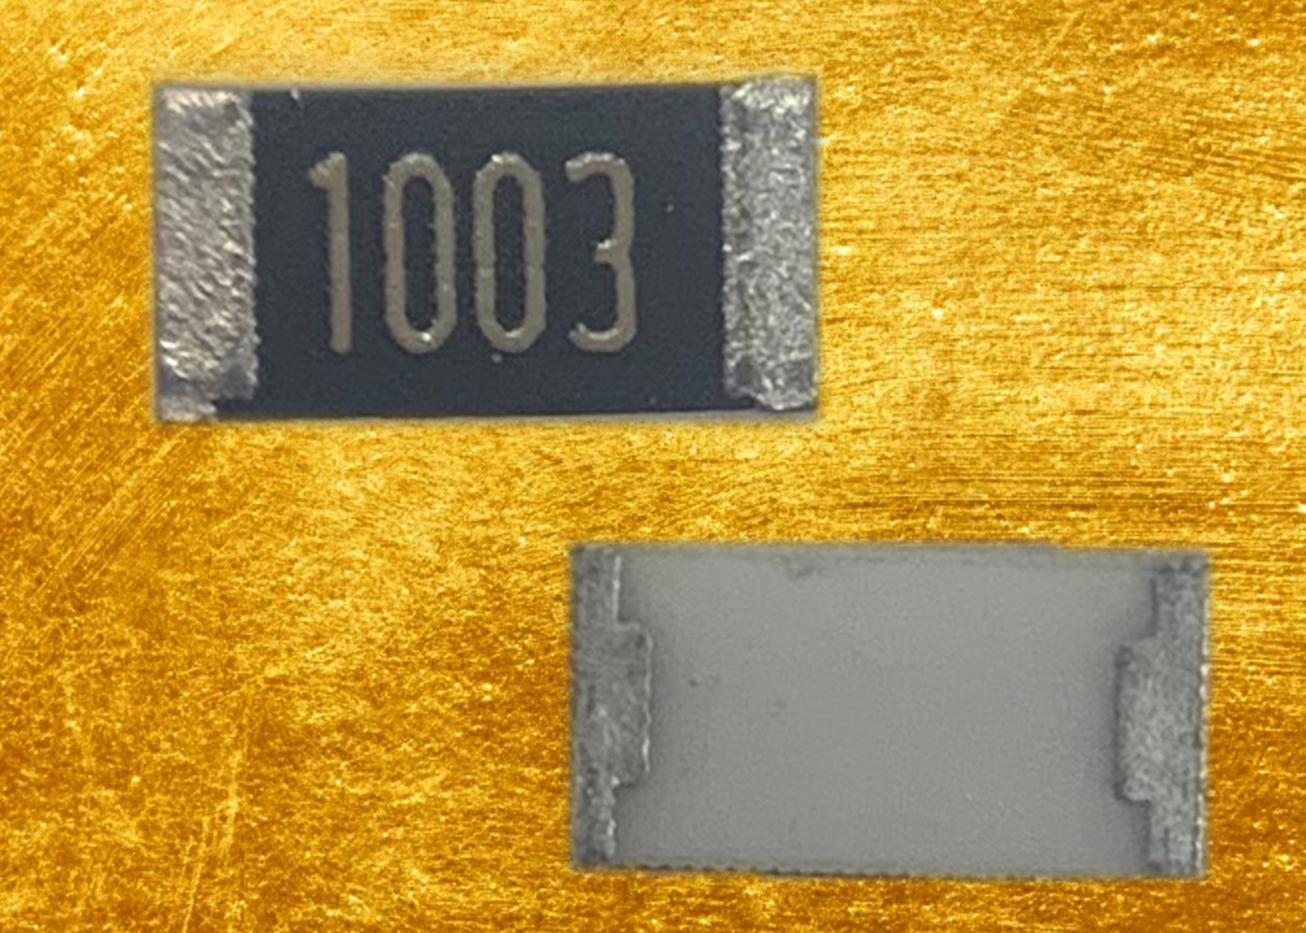 Thick Film Chip Resistors Provide Superior Pulse Handling